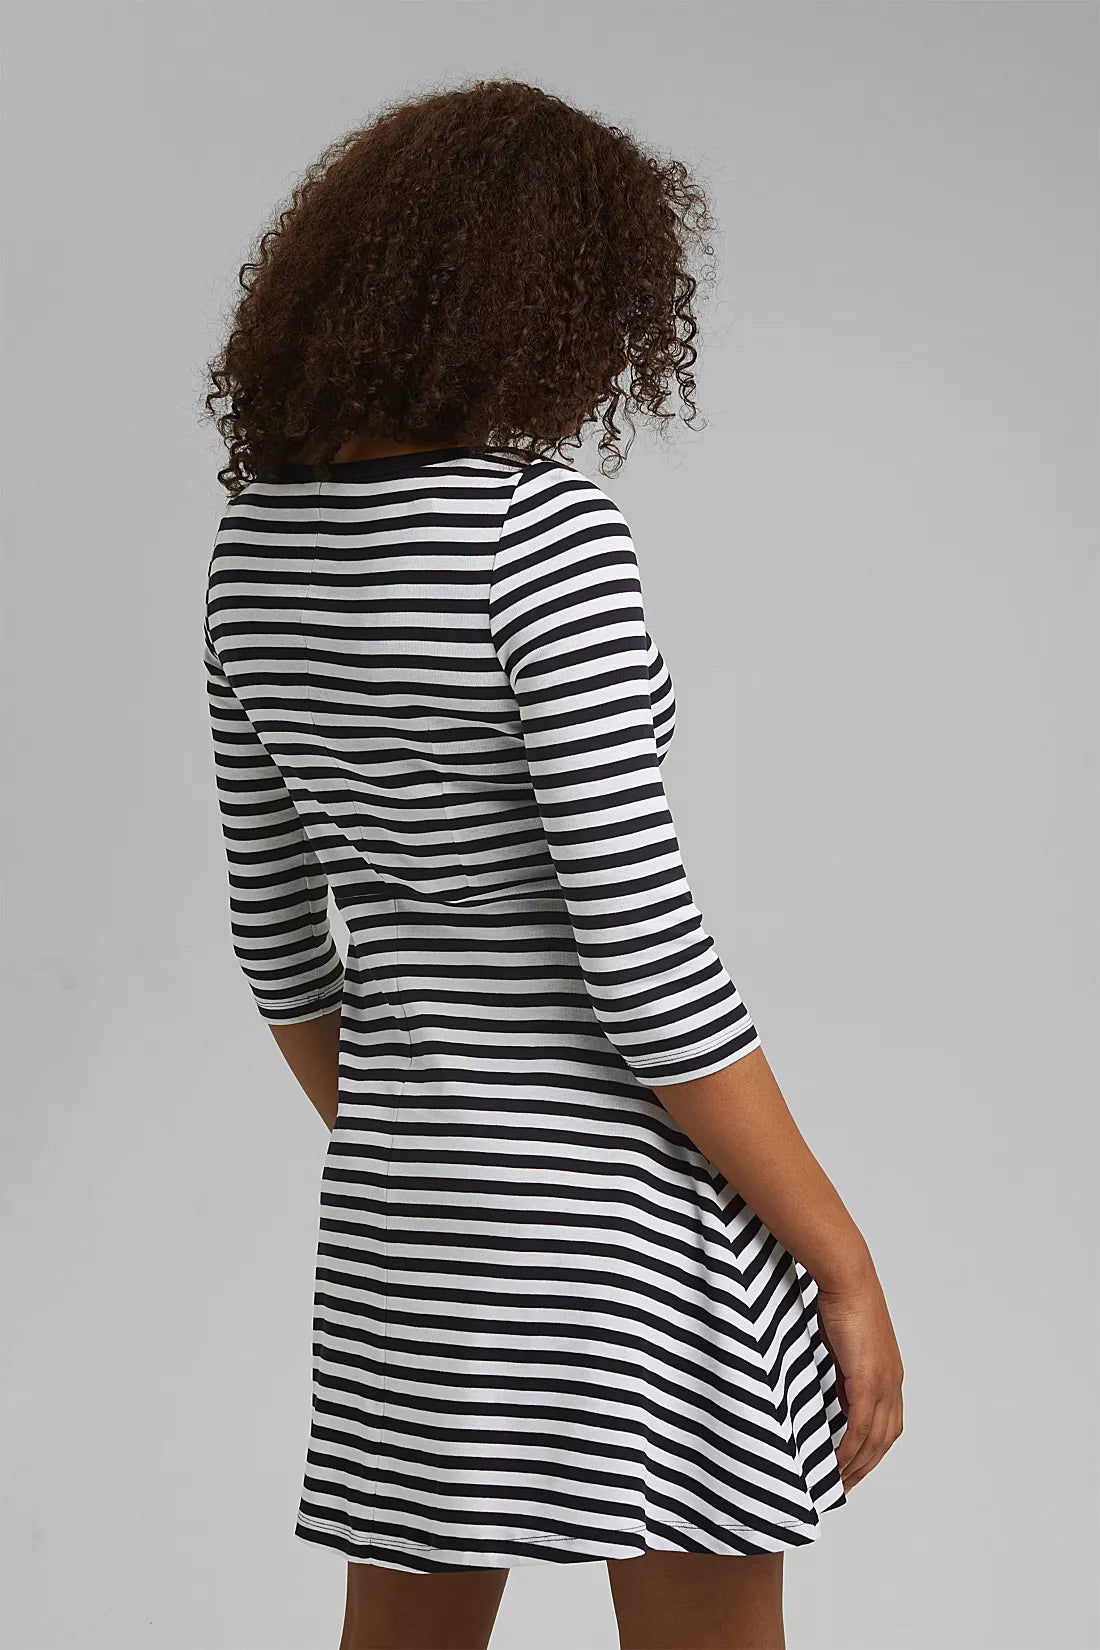 Esprit - Long Sleeve Striped Dress